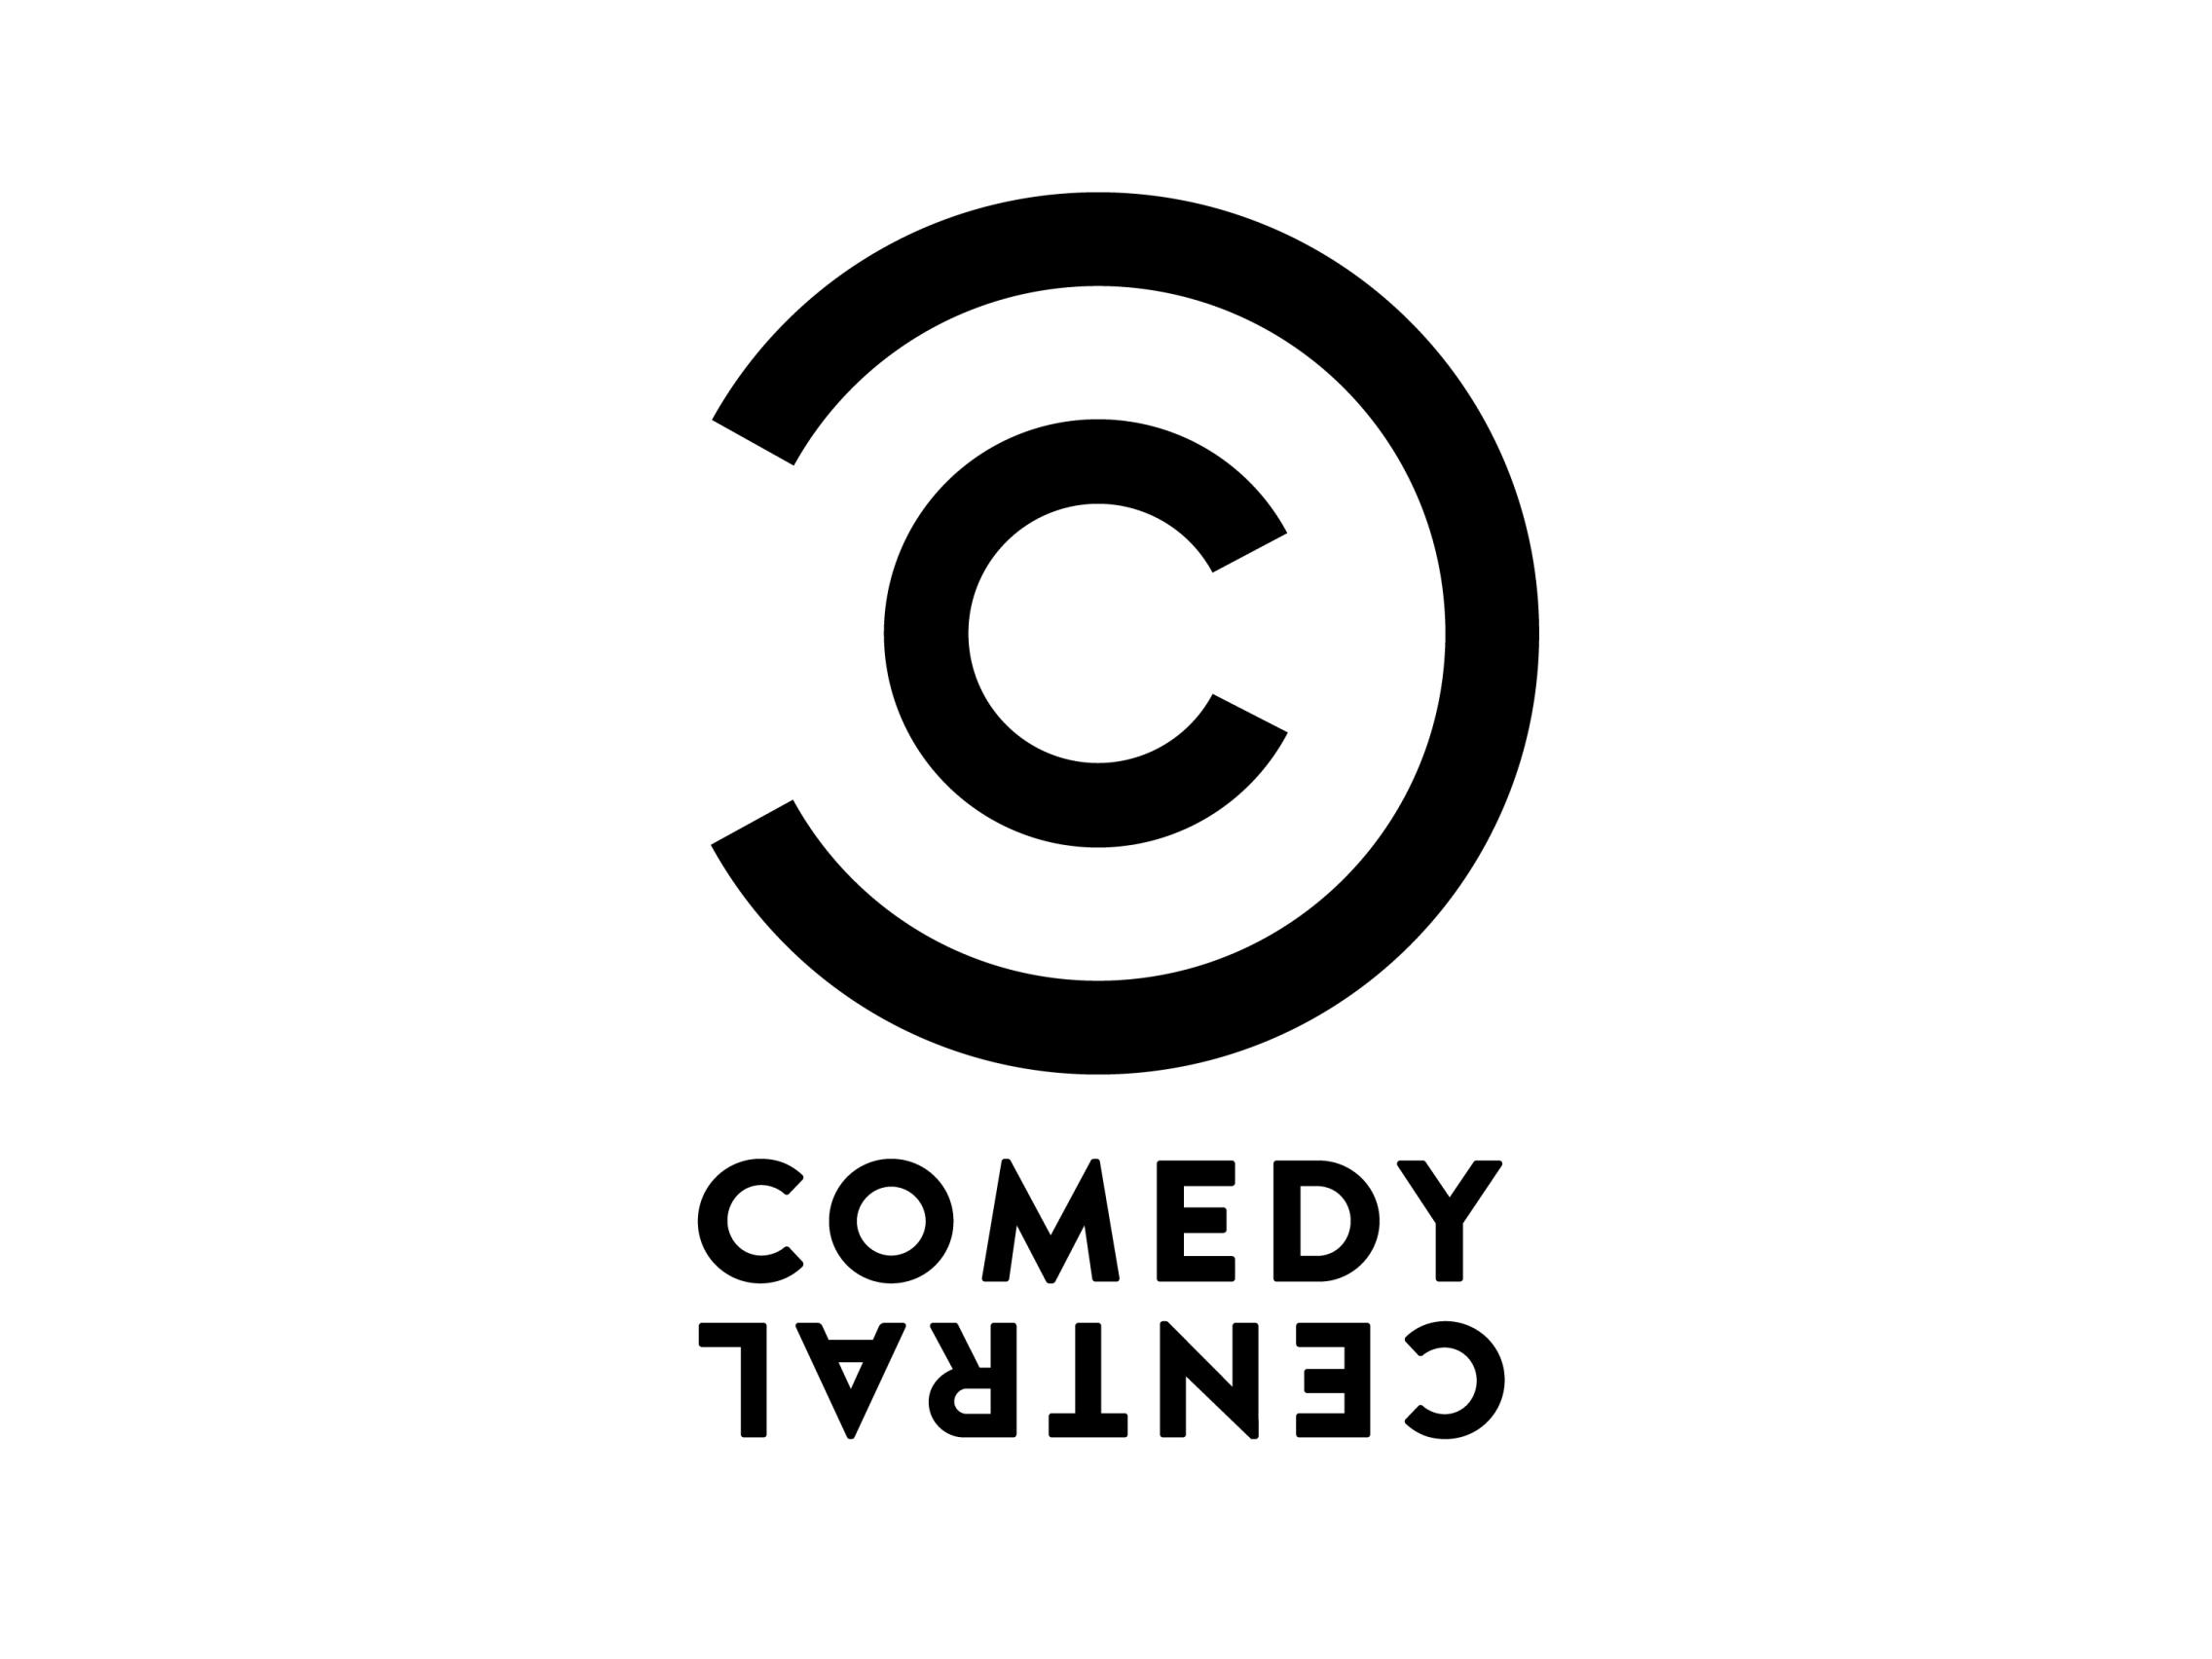 Comedy-Central-wordmark-logo.png